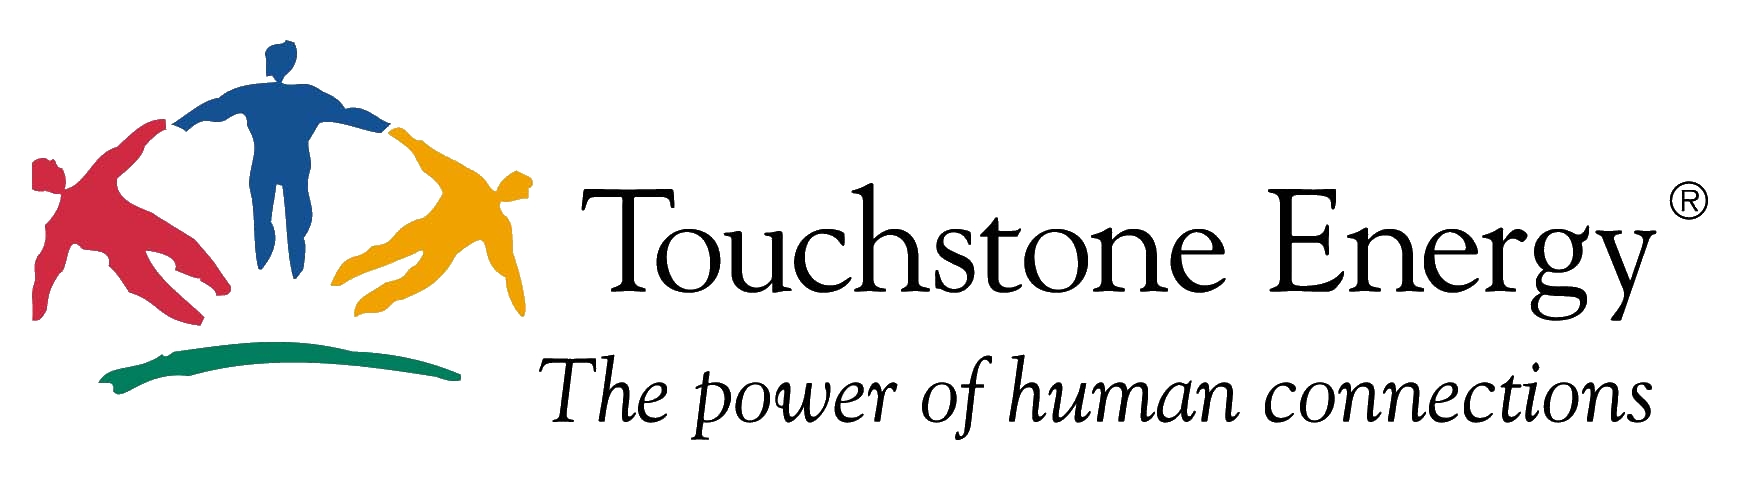 Touchstone energy